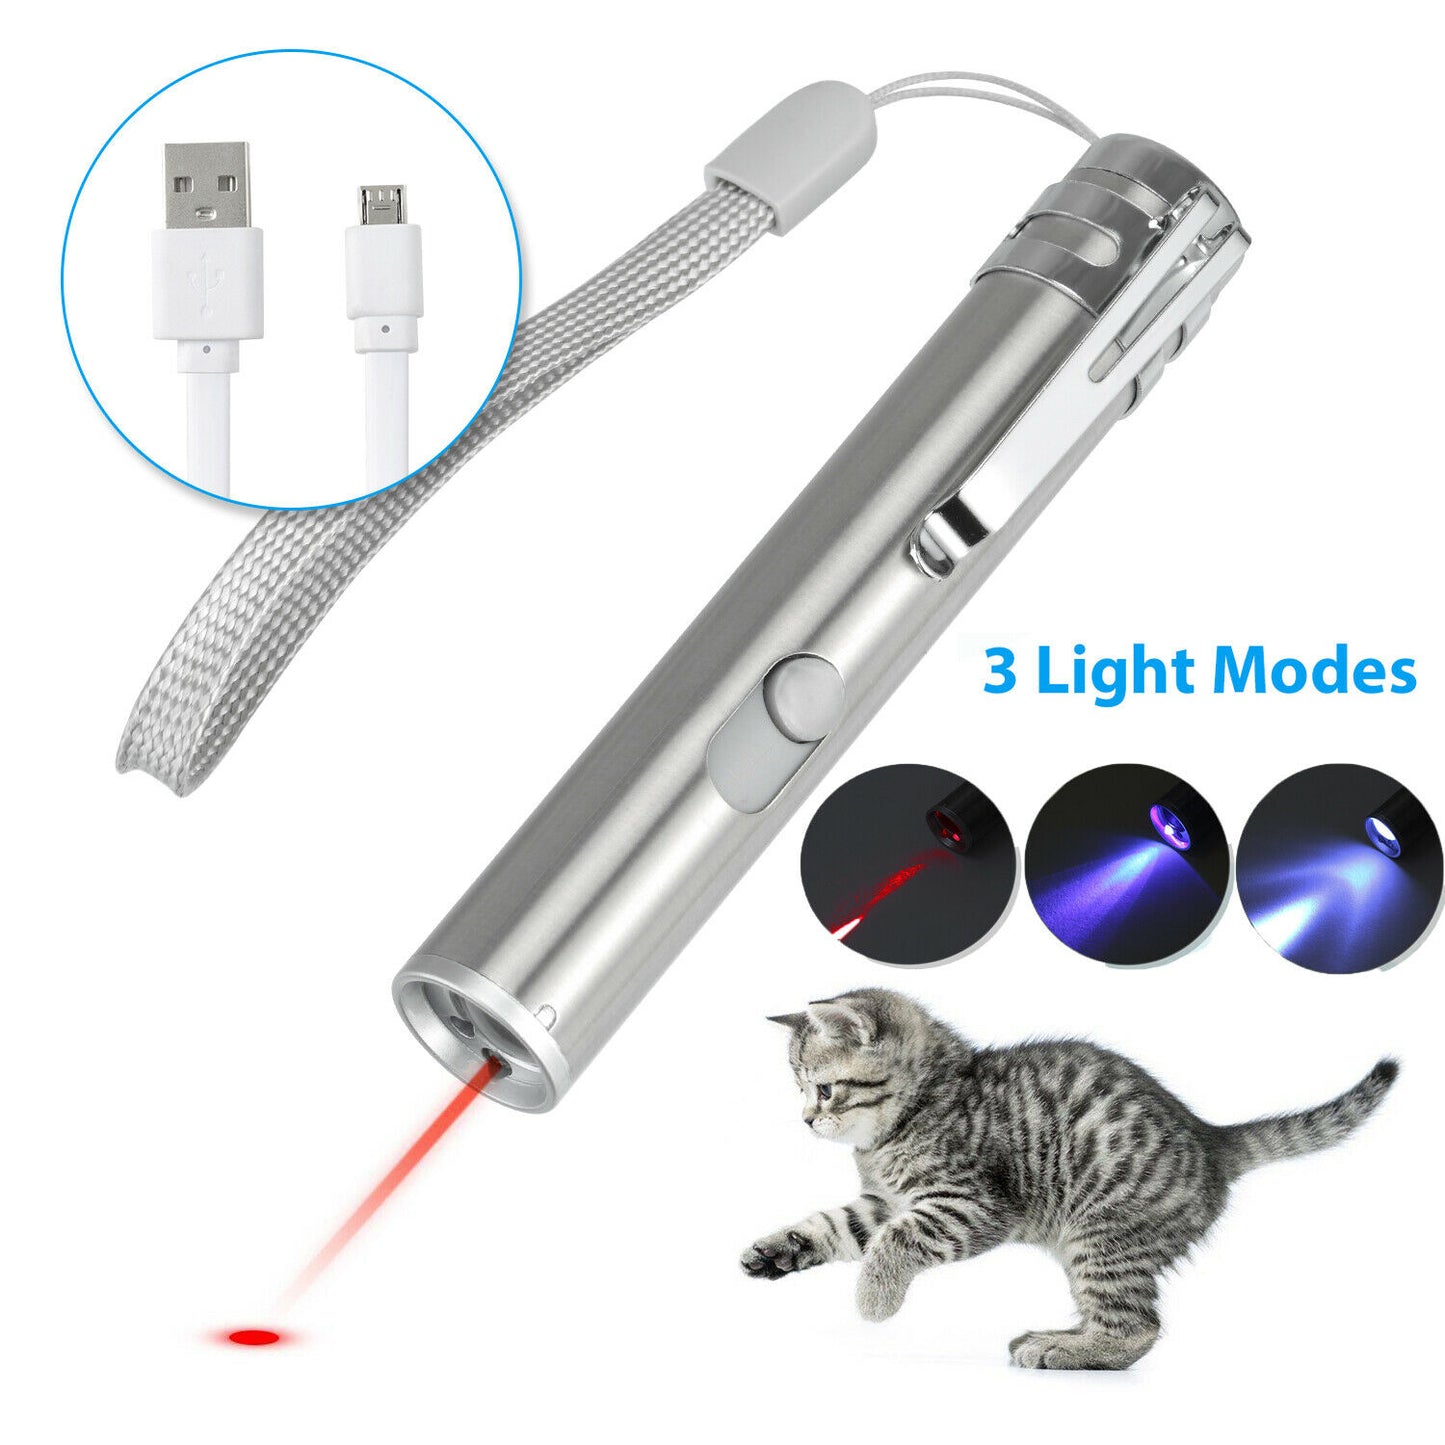 3 en 1 linterna UV roja recargable del juguete del animal doméstico del gato para la linterna del juguete del animal doméstico del perro del gato